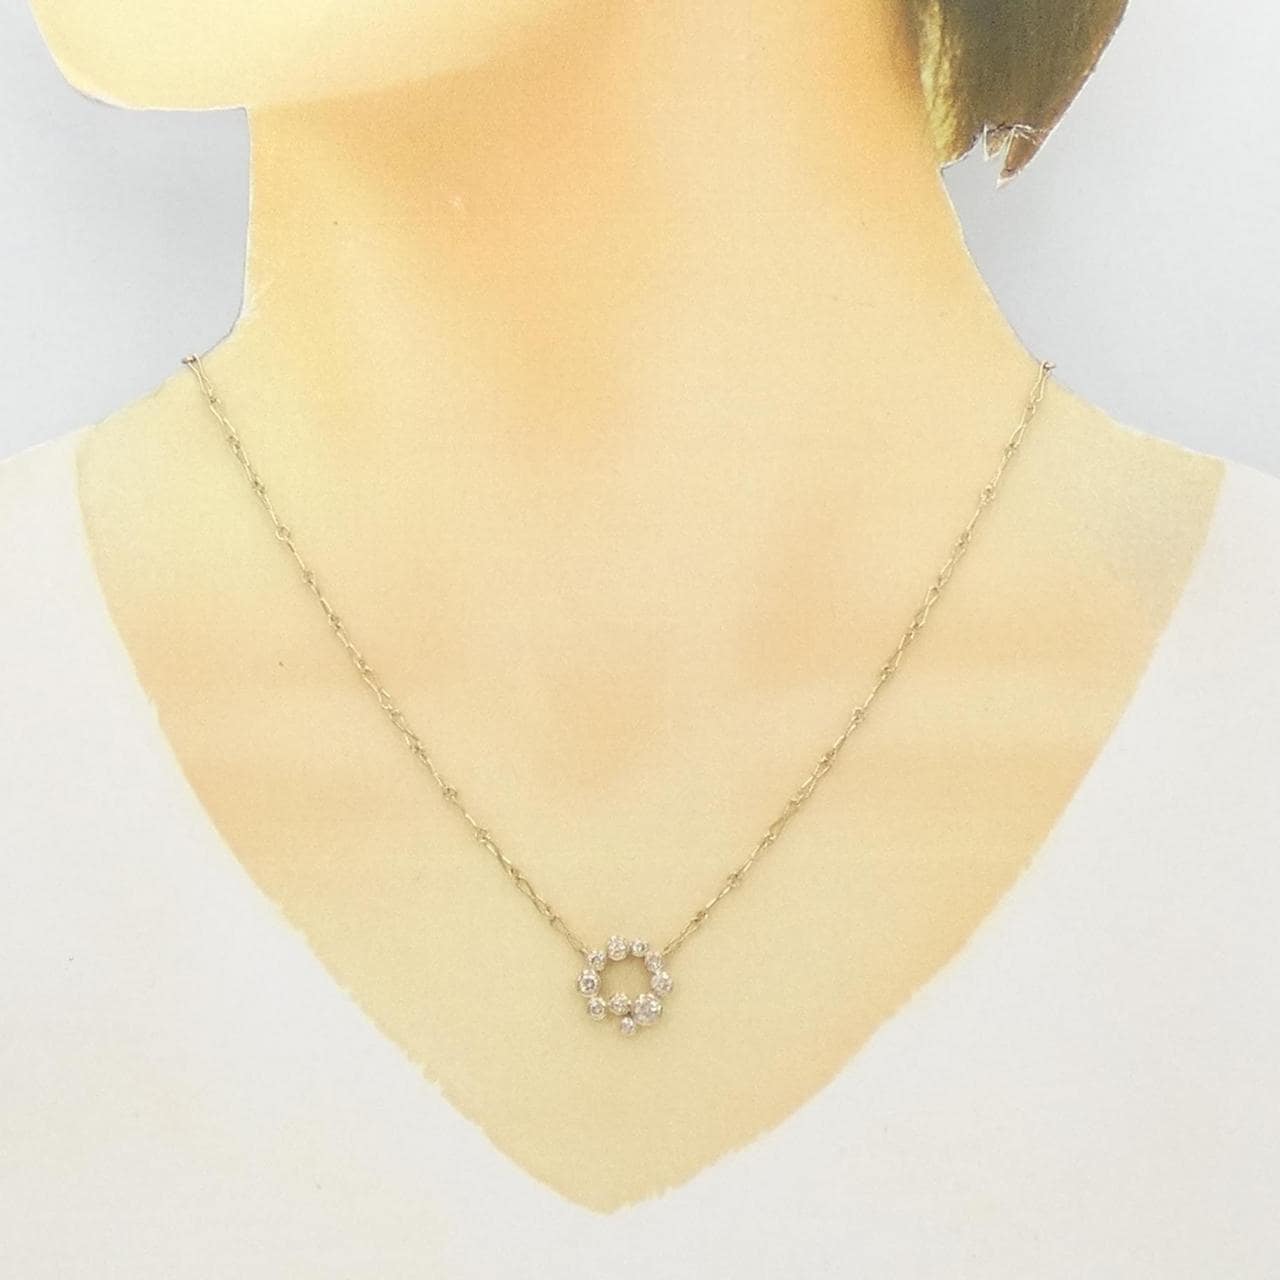 Kashikey necklace 0.65CT